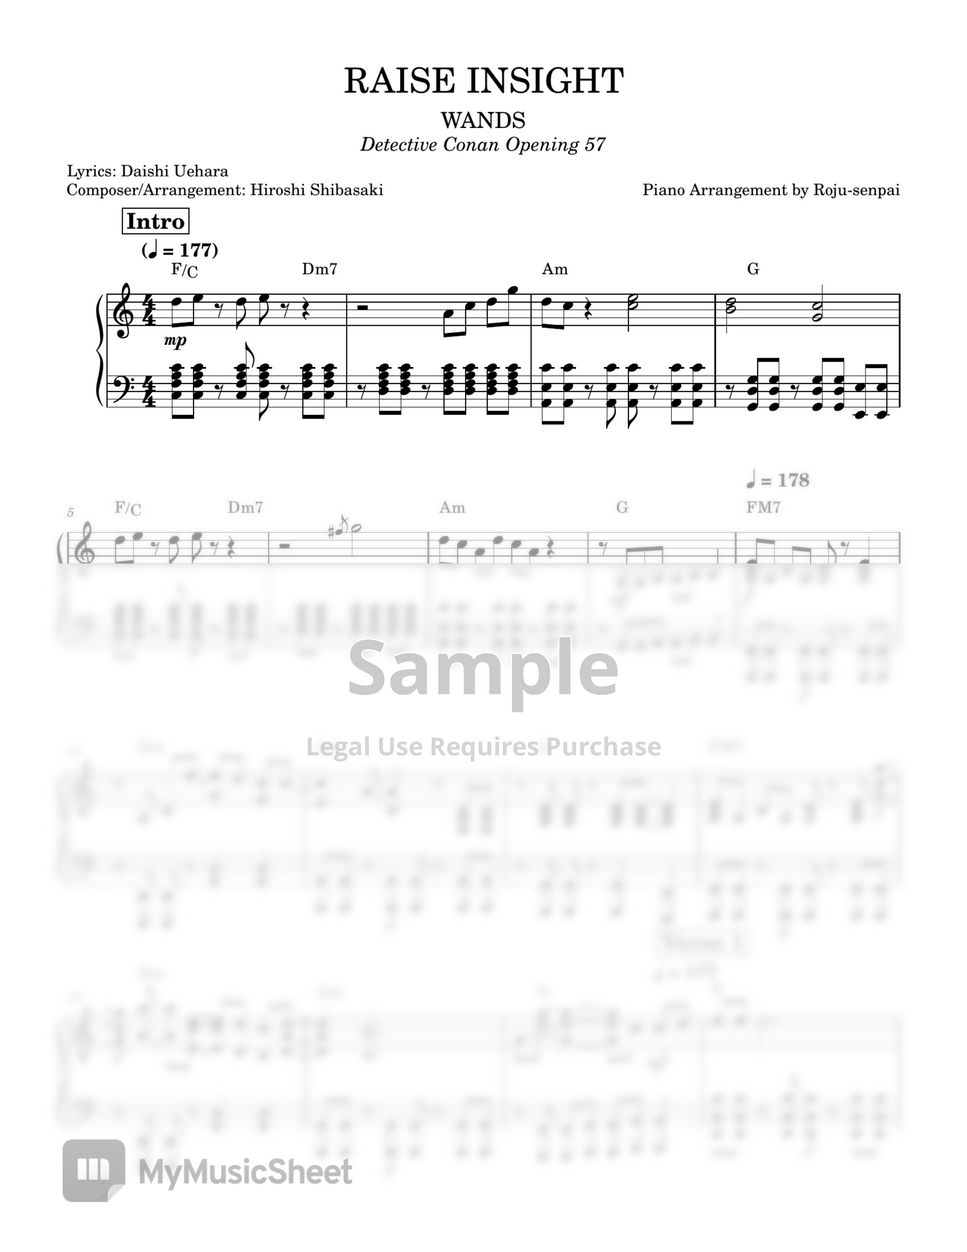 WANDS - RAISE INSIGHT (Piano Sheet Music with MIDI & MSCZ) by Roju-senpai